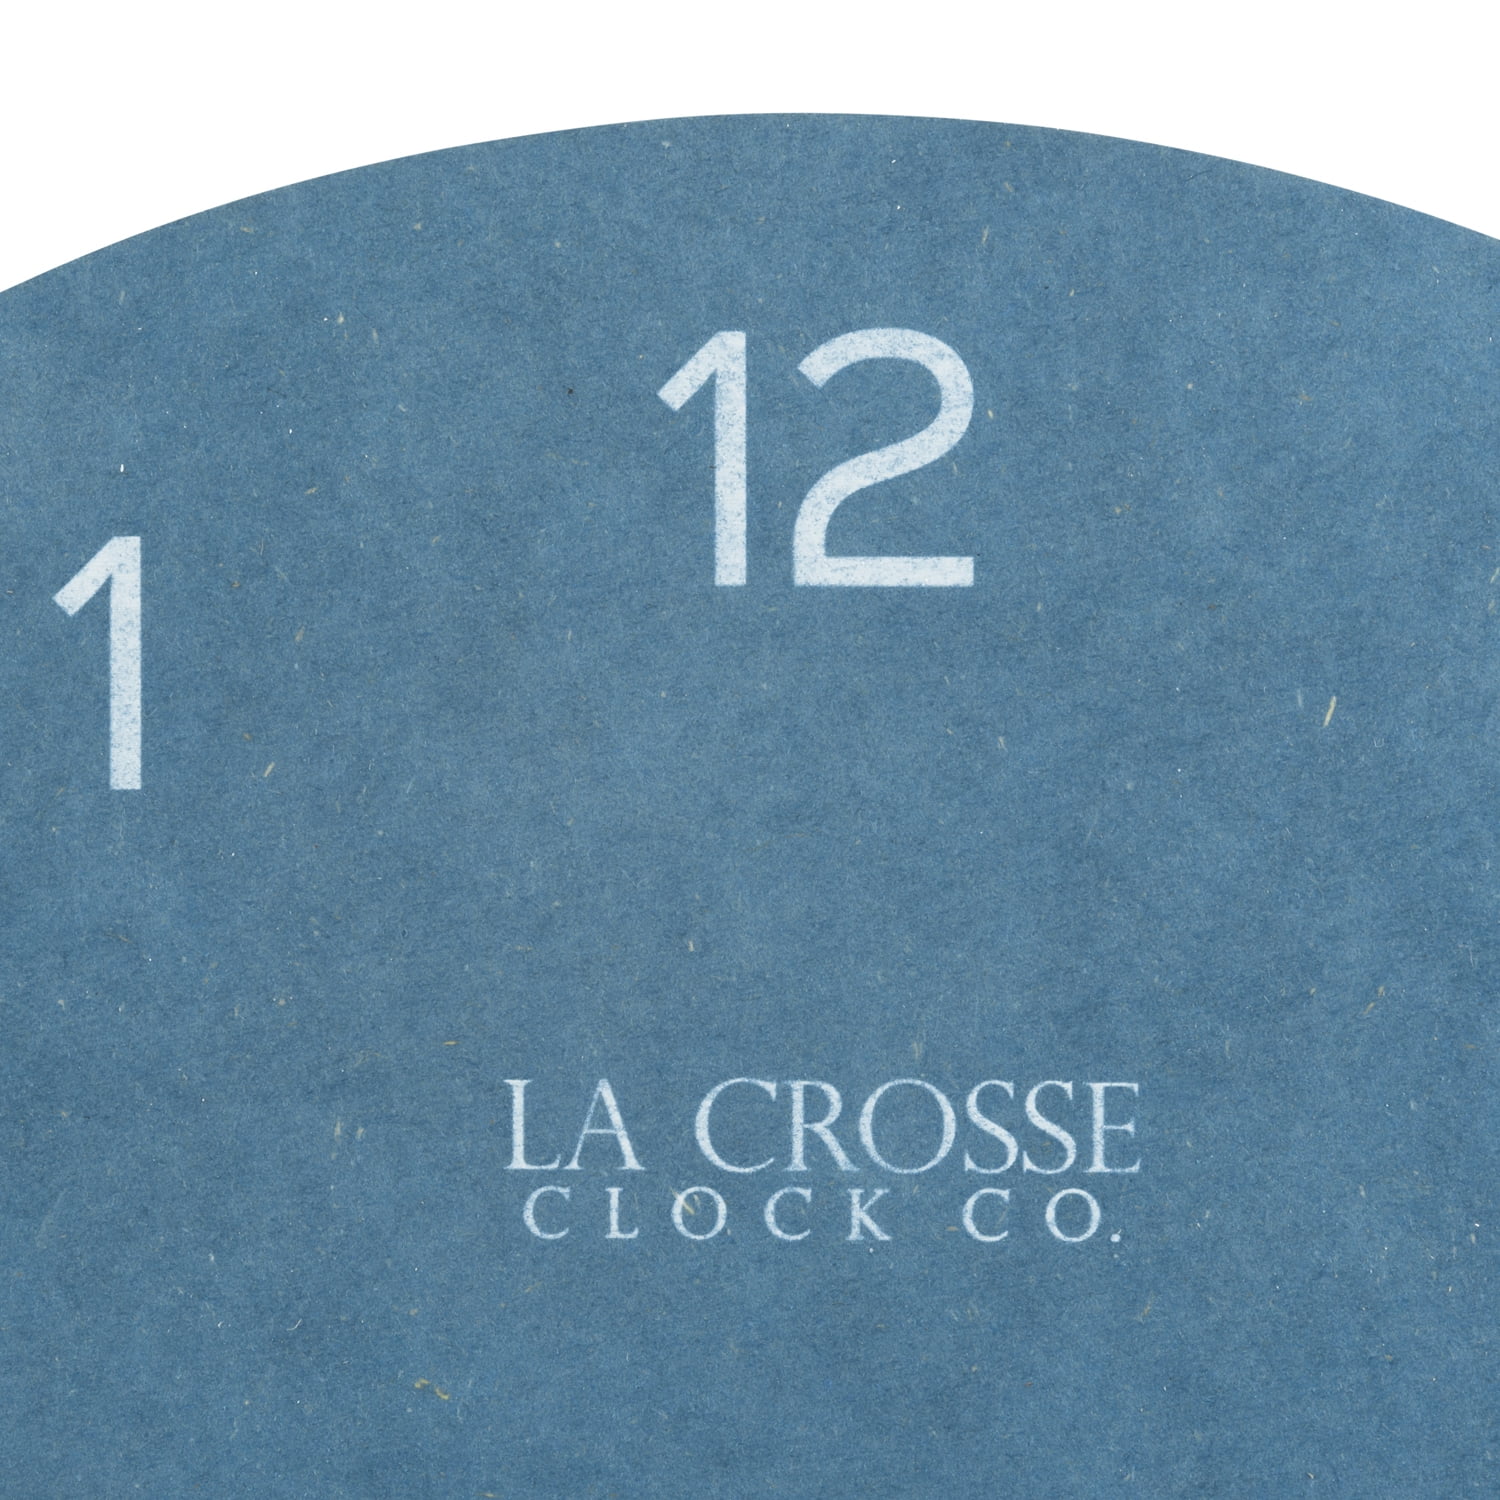 La Crosse Clock Co.